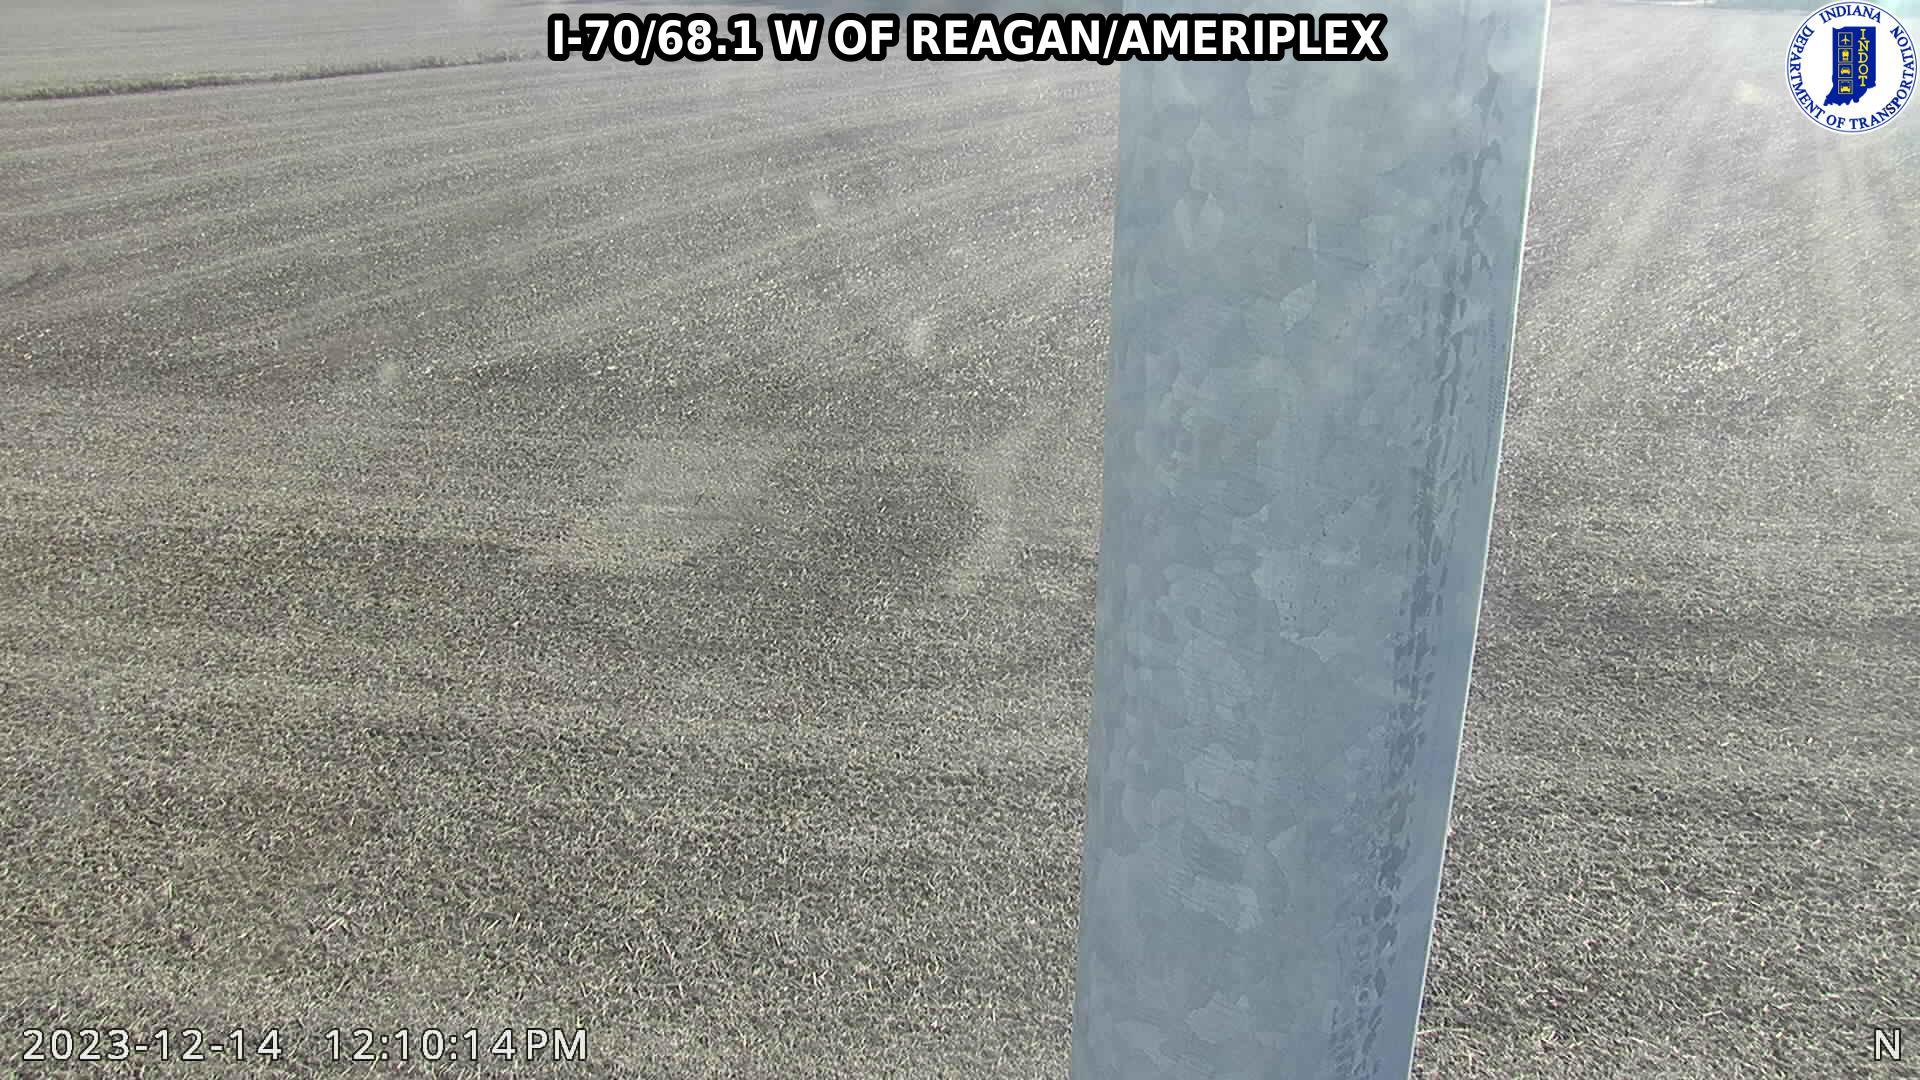 Traffic Cam Plainfield: I-70: I-70/68.1 W OF REAGAN/AMERIPLEX